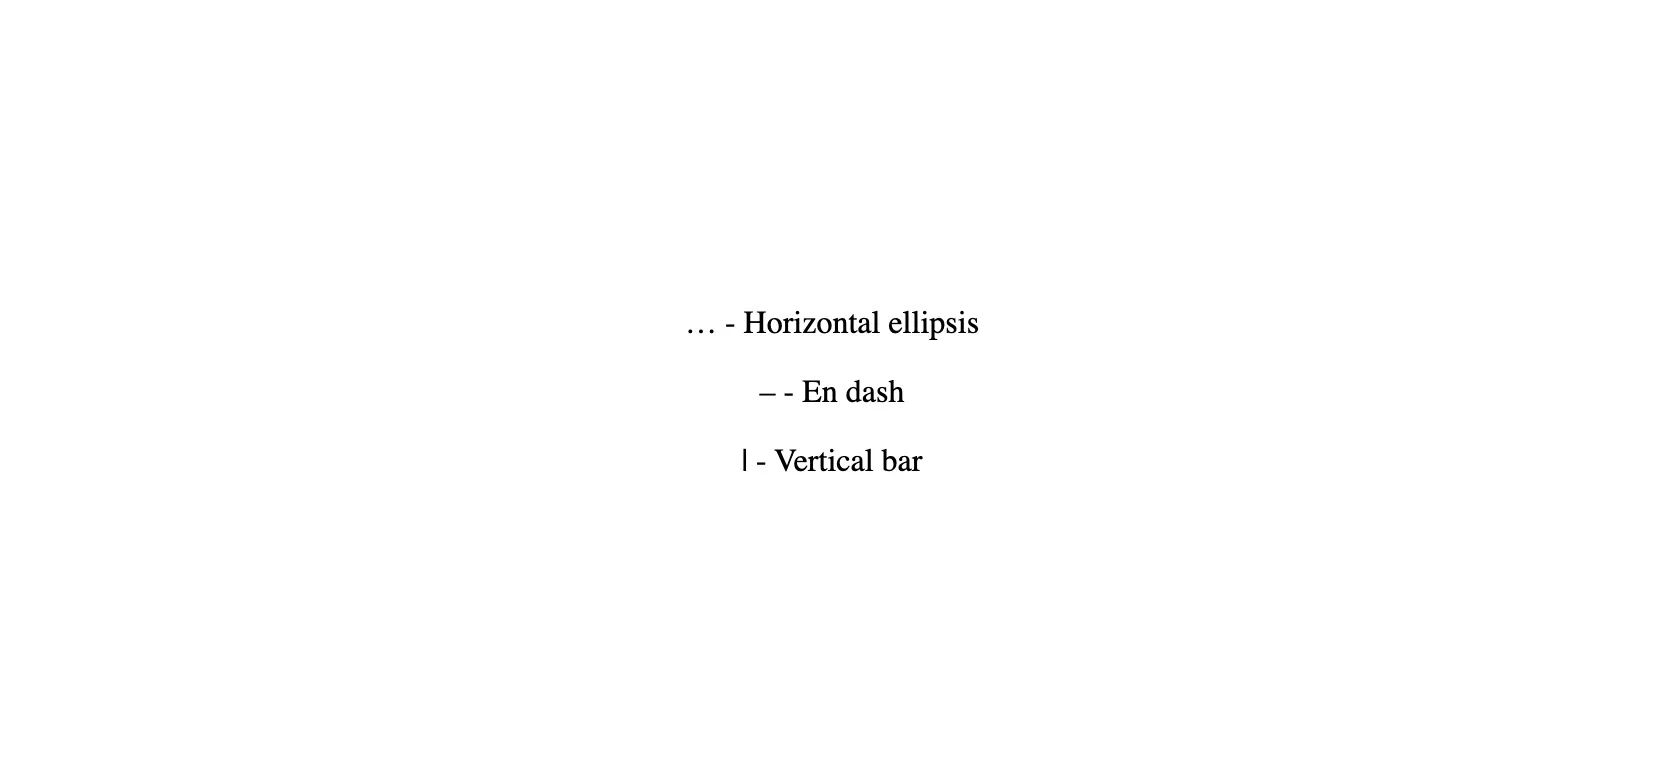 Horizontal Ellipsis, En Dash, and Vertical Bar